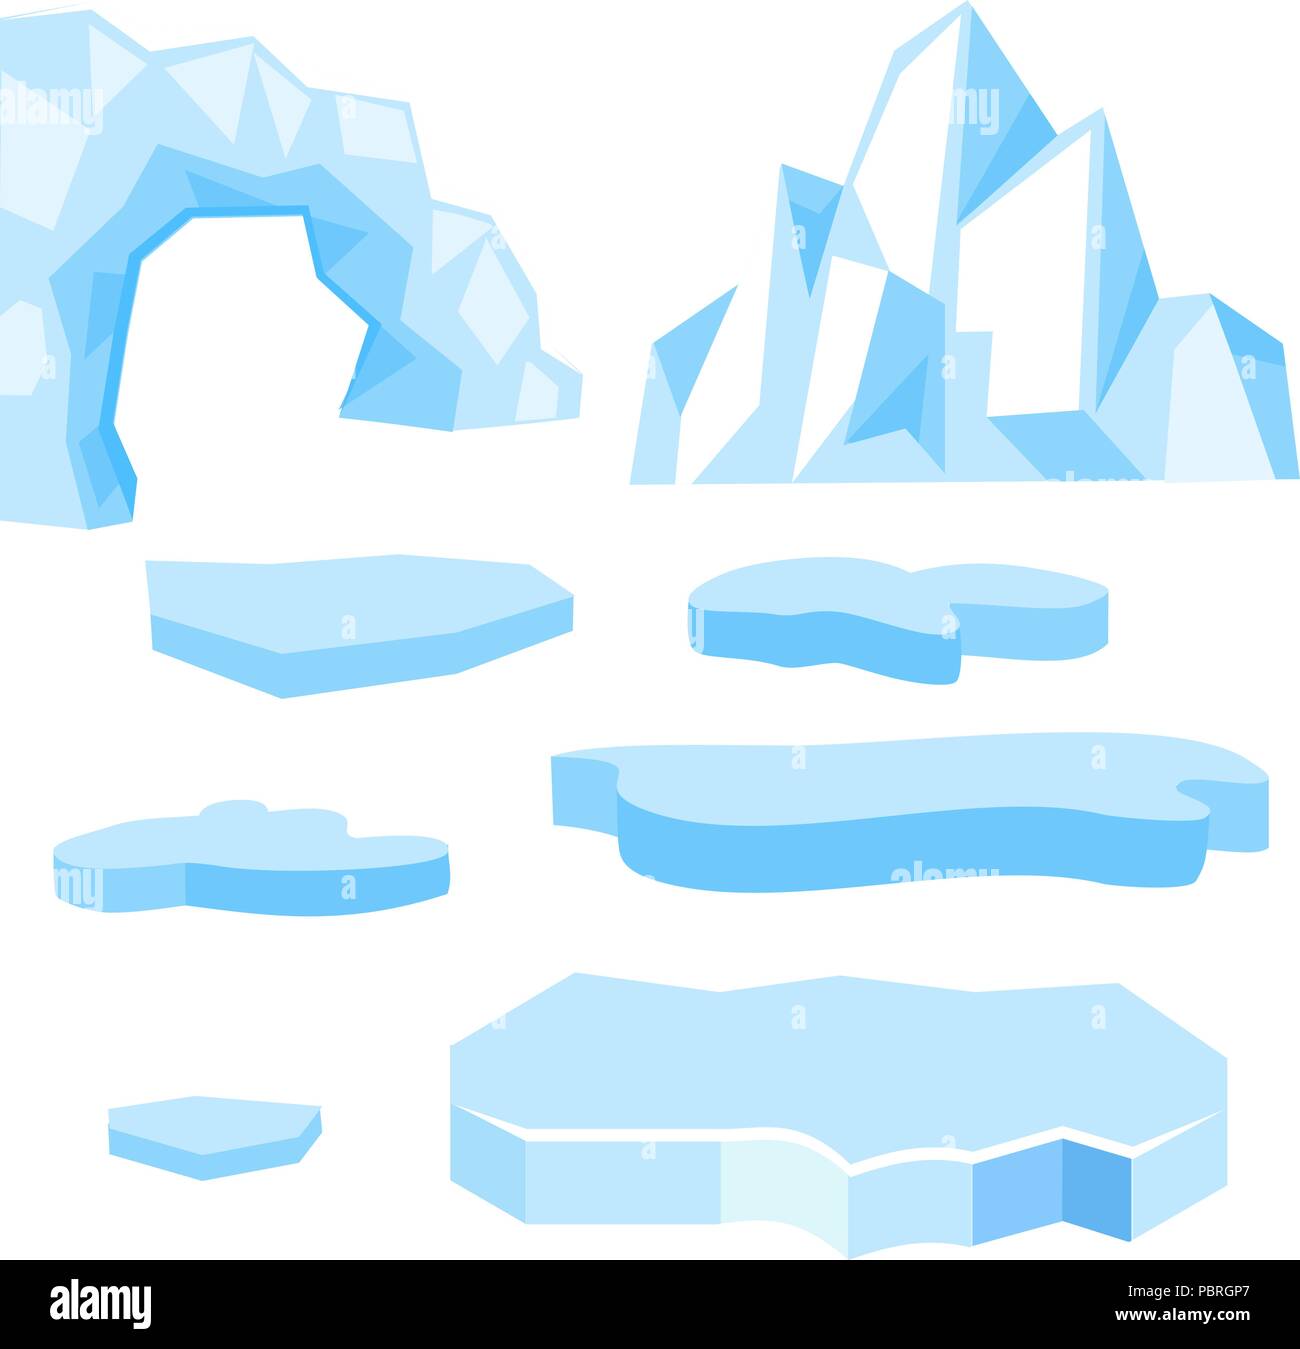 Set di cartoon vettore floes blu Iceberg e di forma diversa Illustrazione Vettoriale